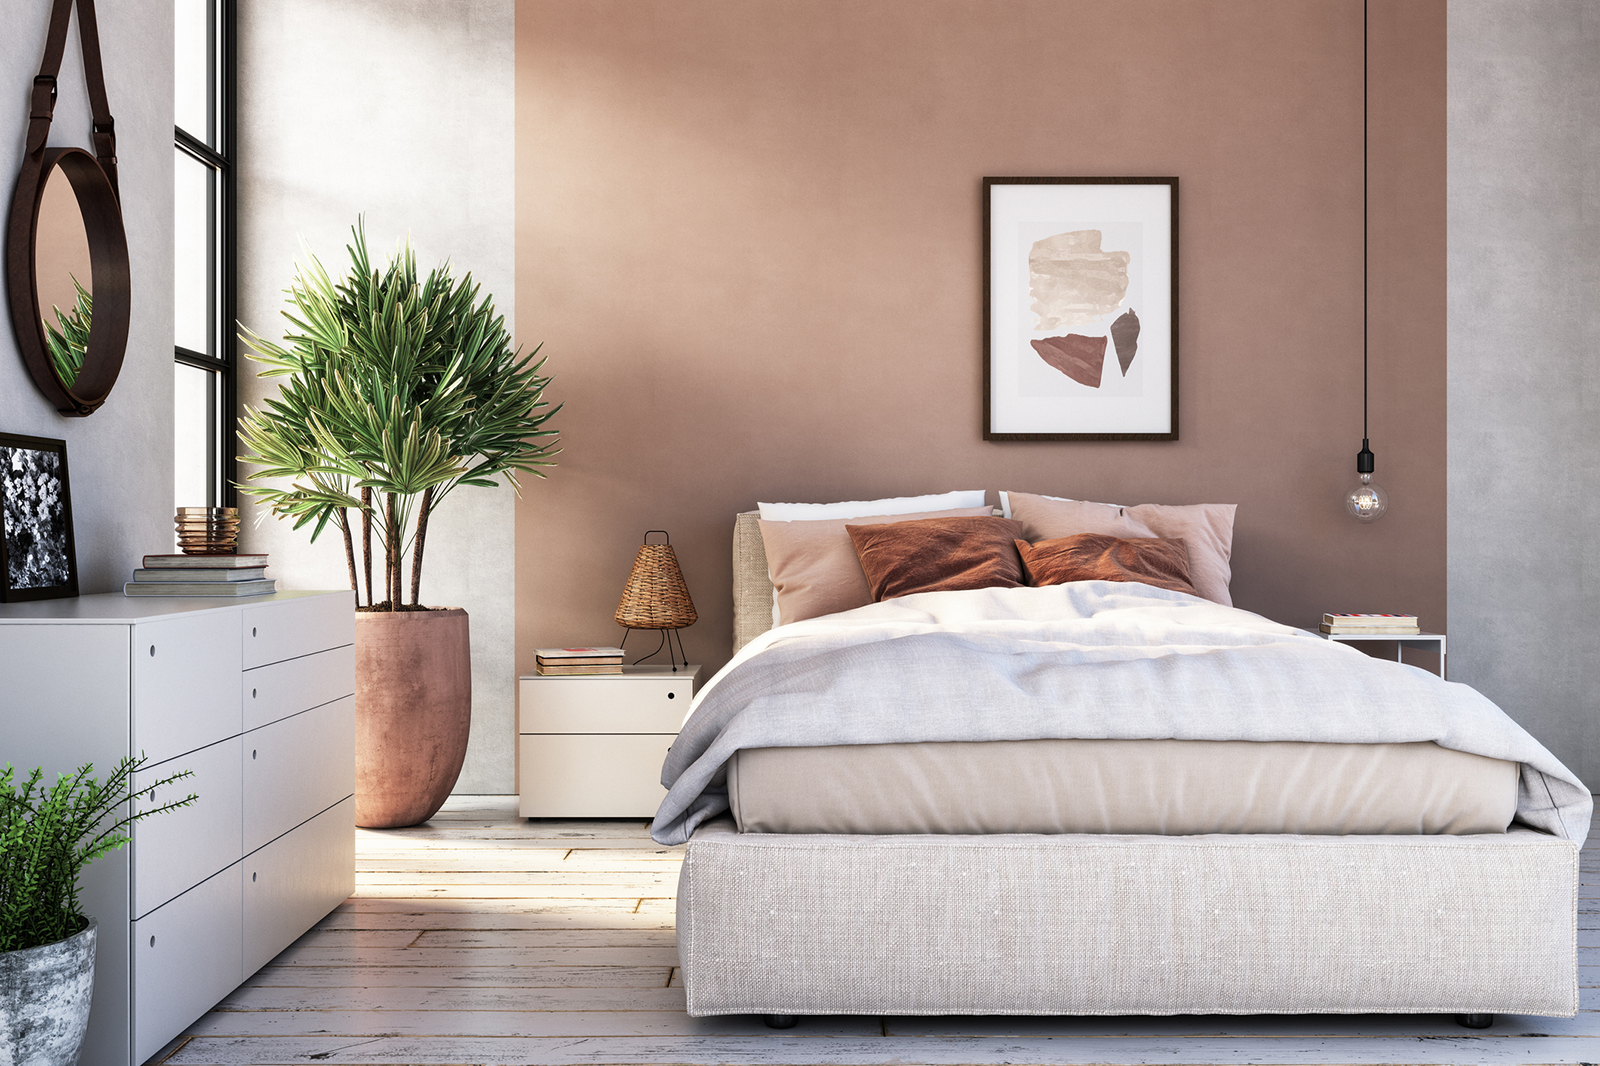 bedroom interior design with plants